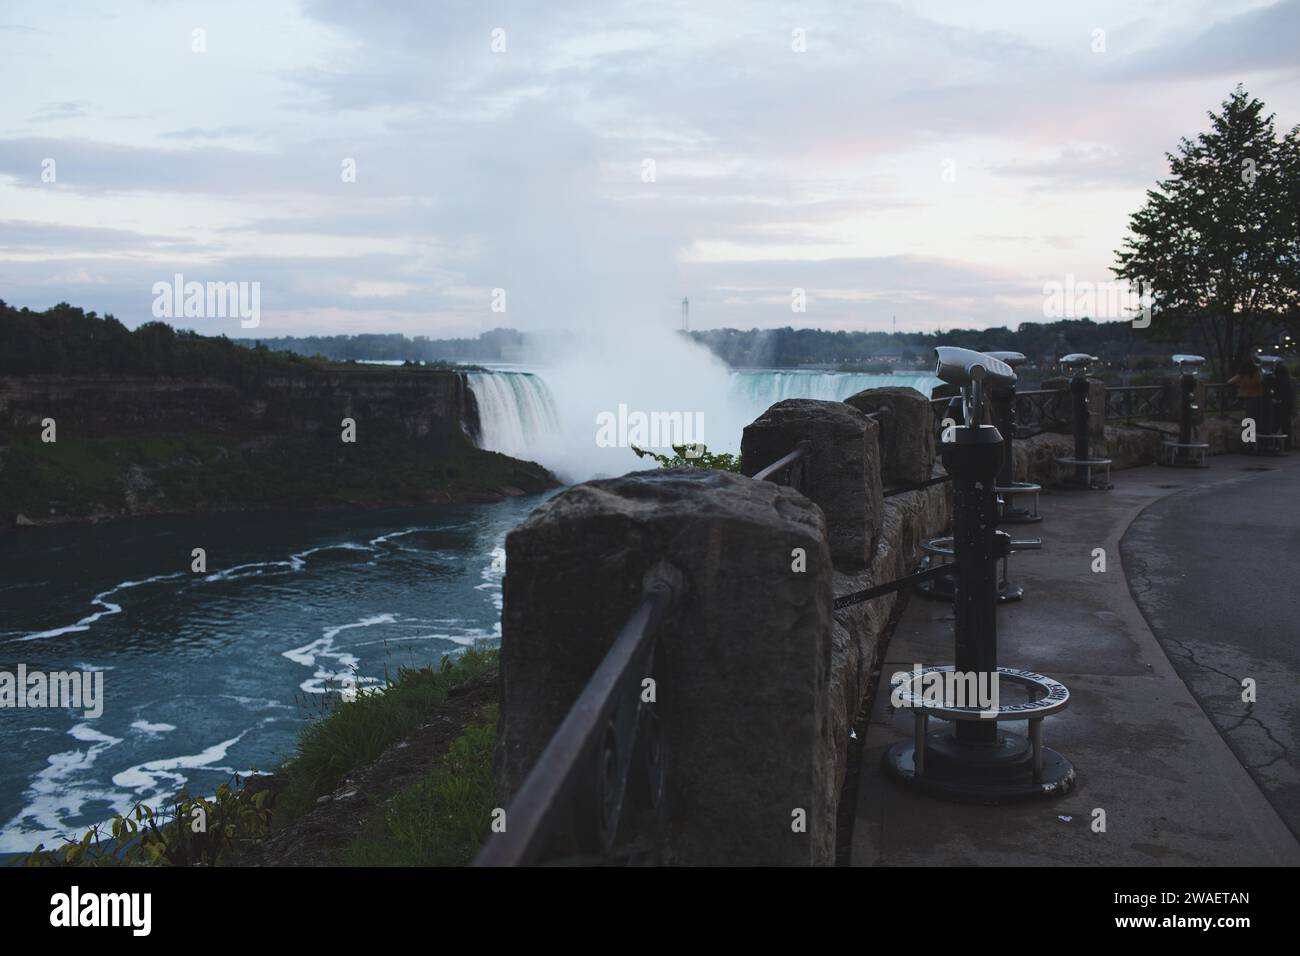 The view of Niagara Falls in Ontario, Canada Stock Photo